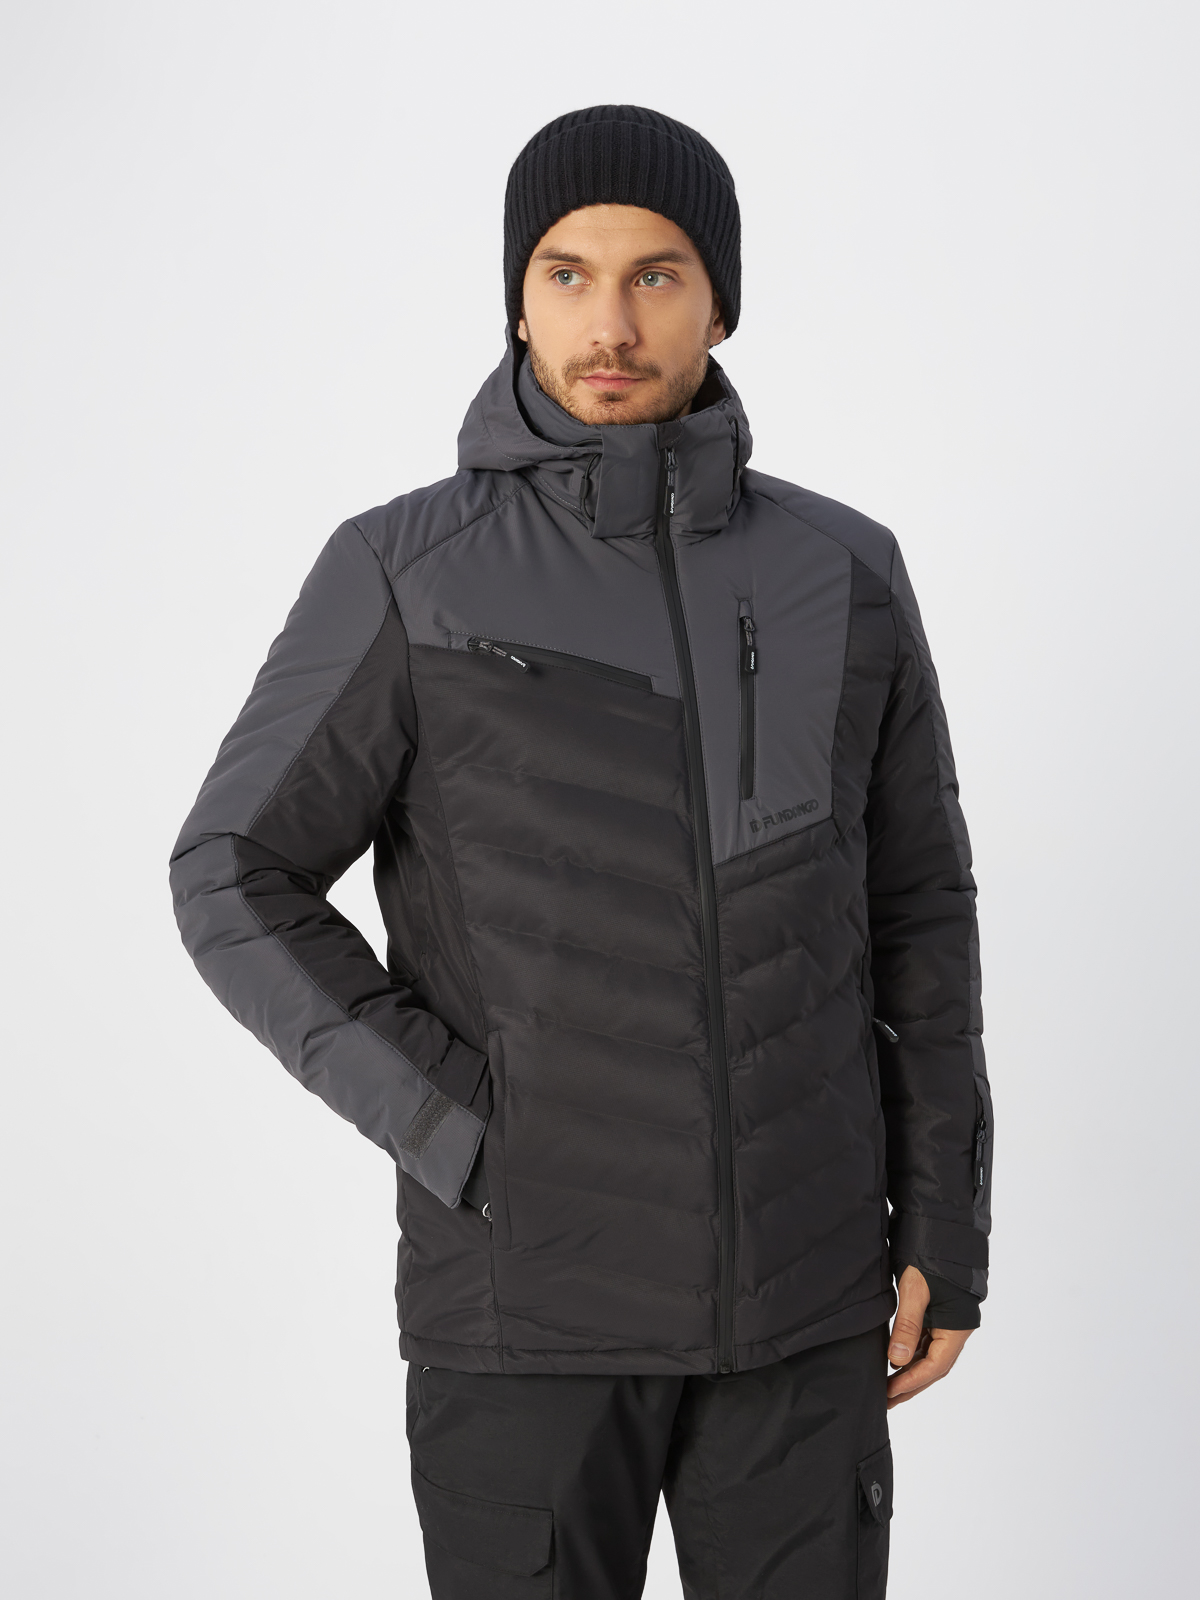 Куртка Fundango для мужчин, размер XXL, 1QB106, чёрно-серая